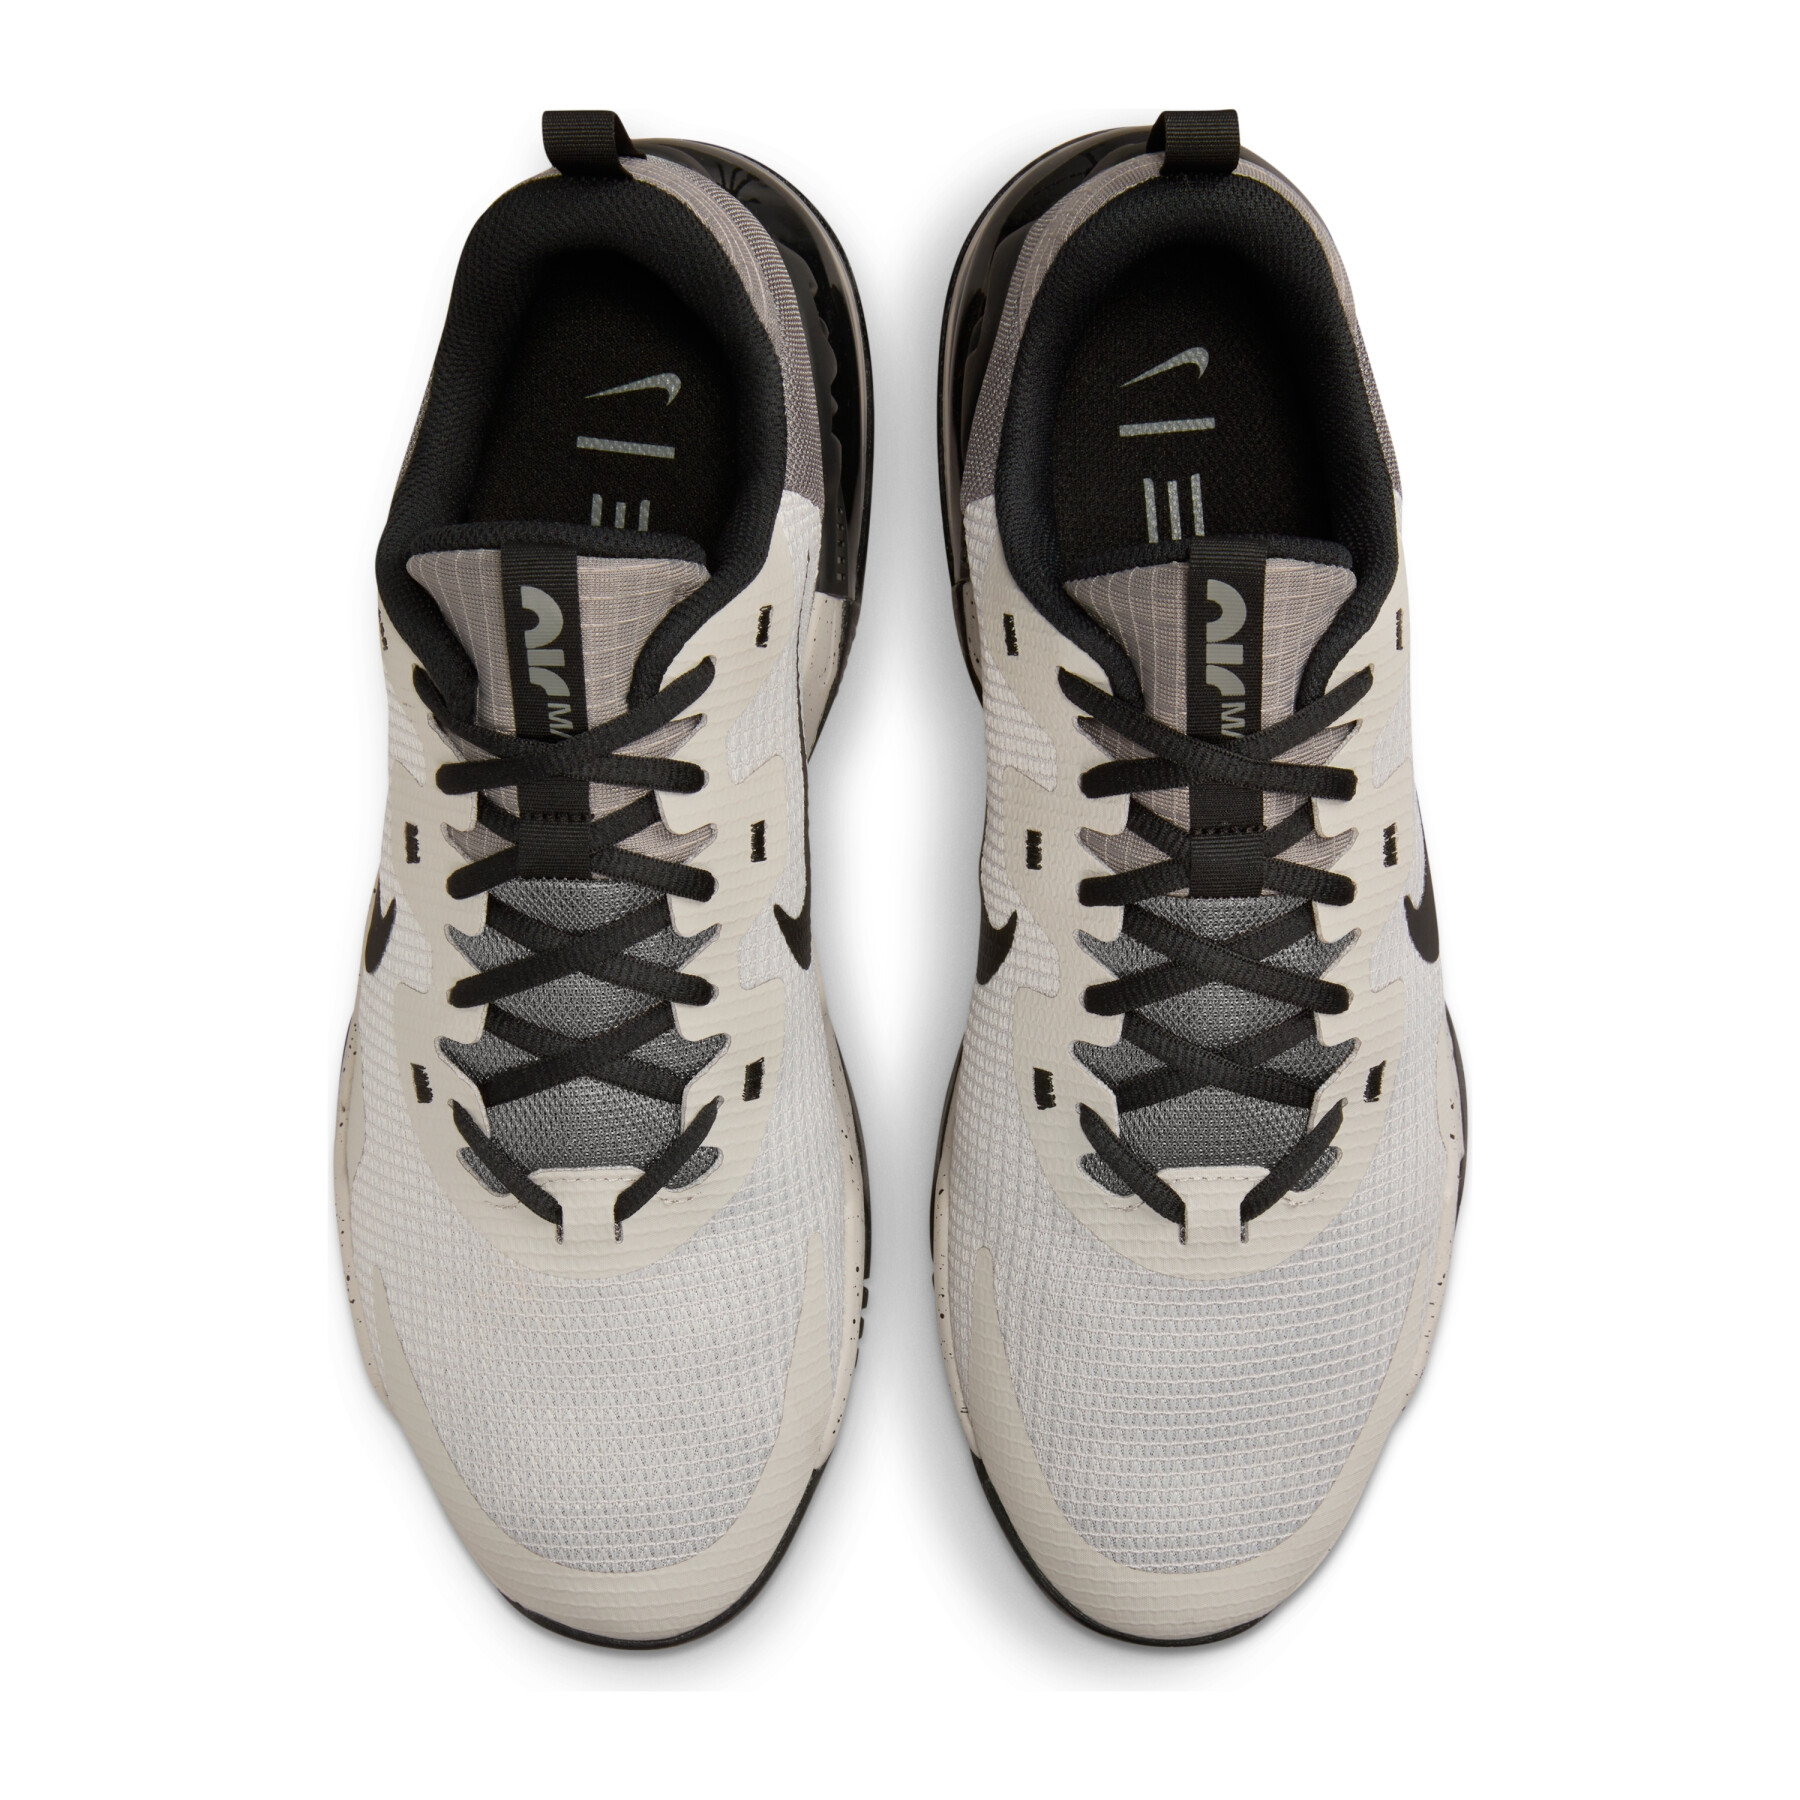 Zapatillas de cross training Nike Air Max Alpha Trainer 5